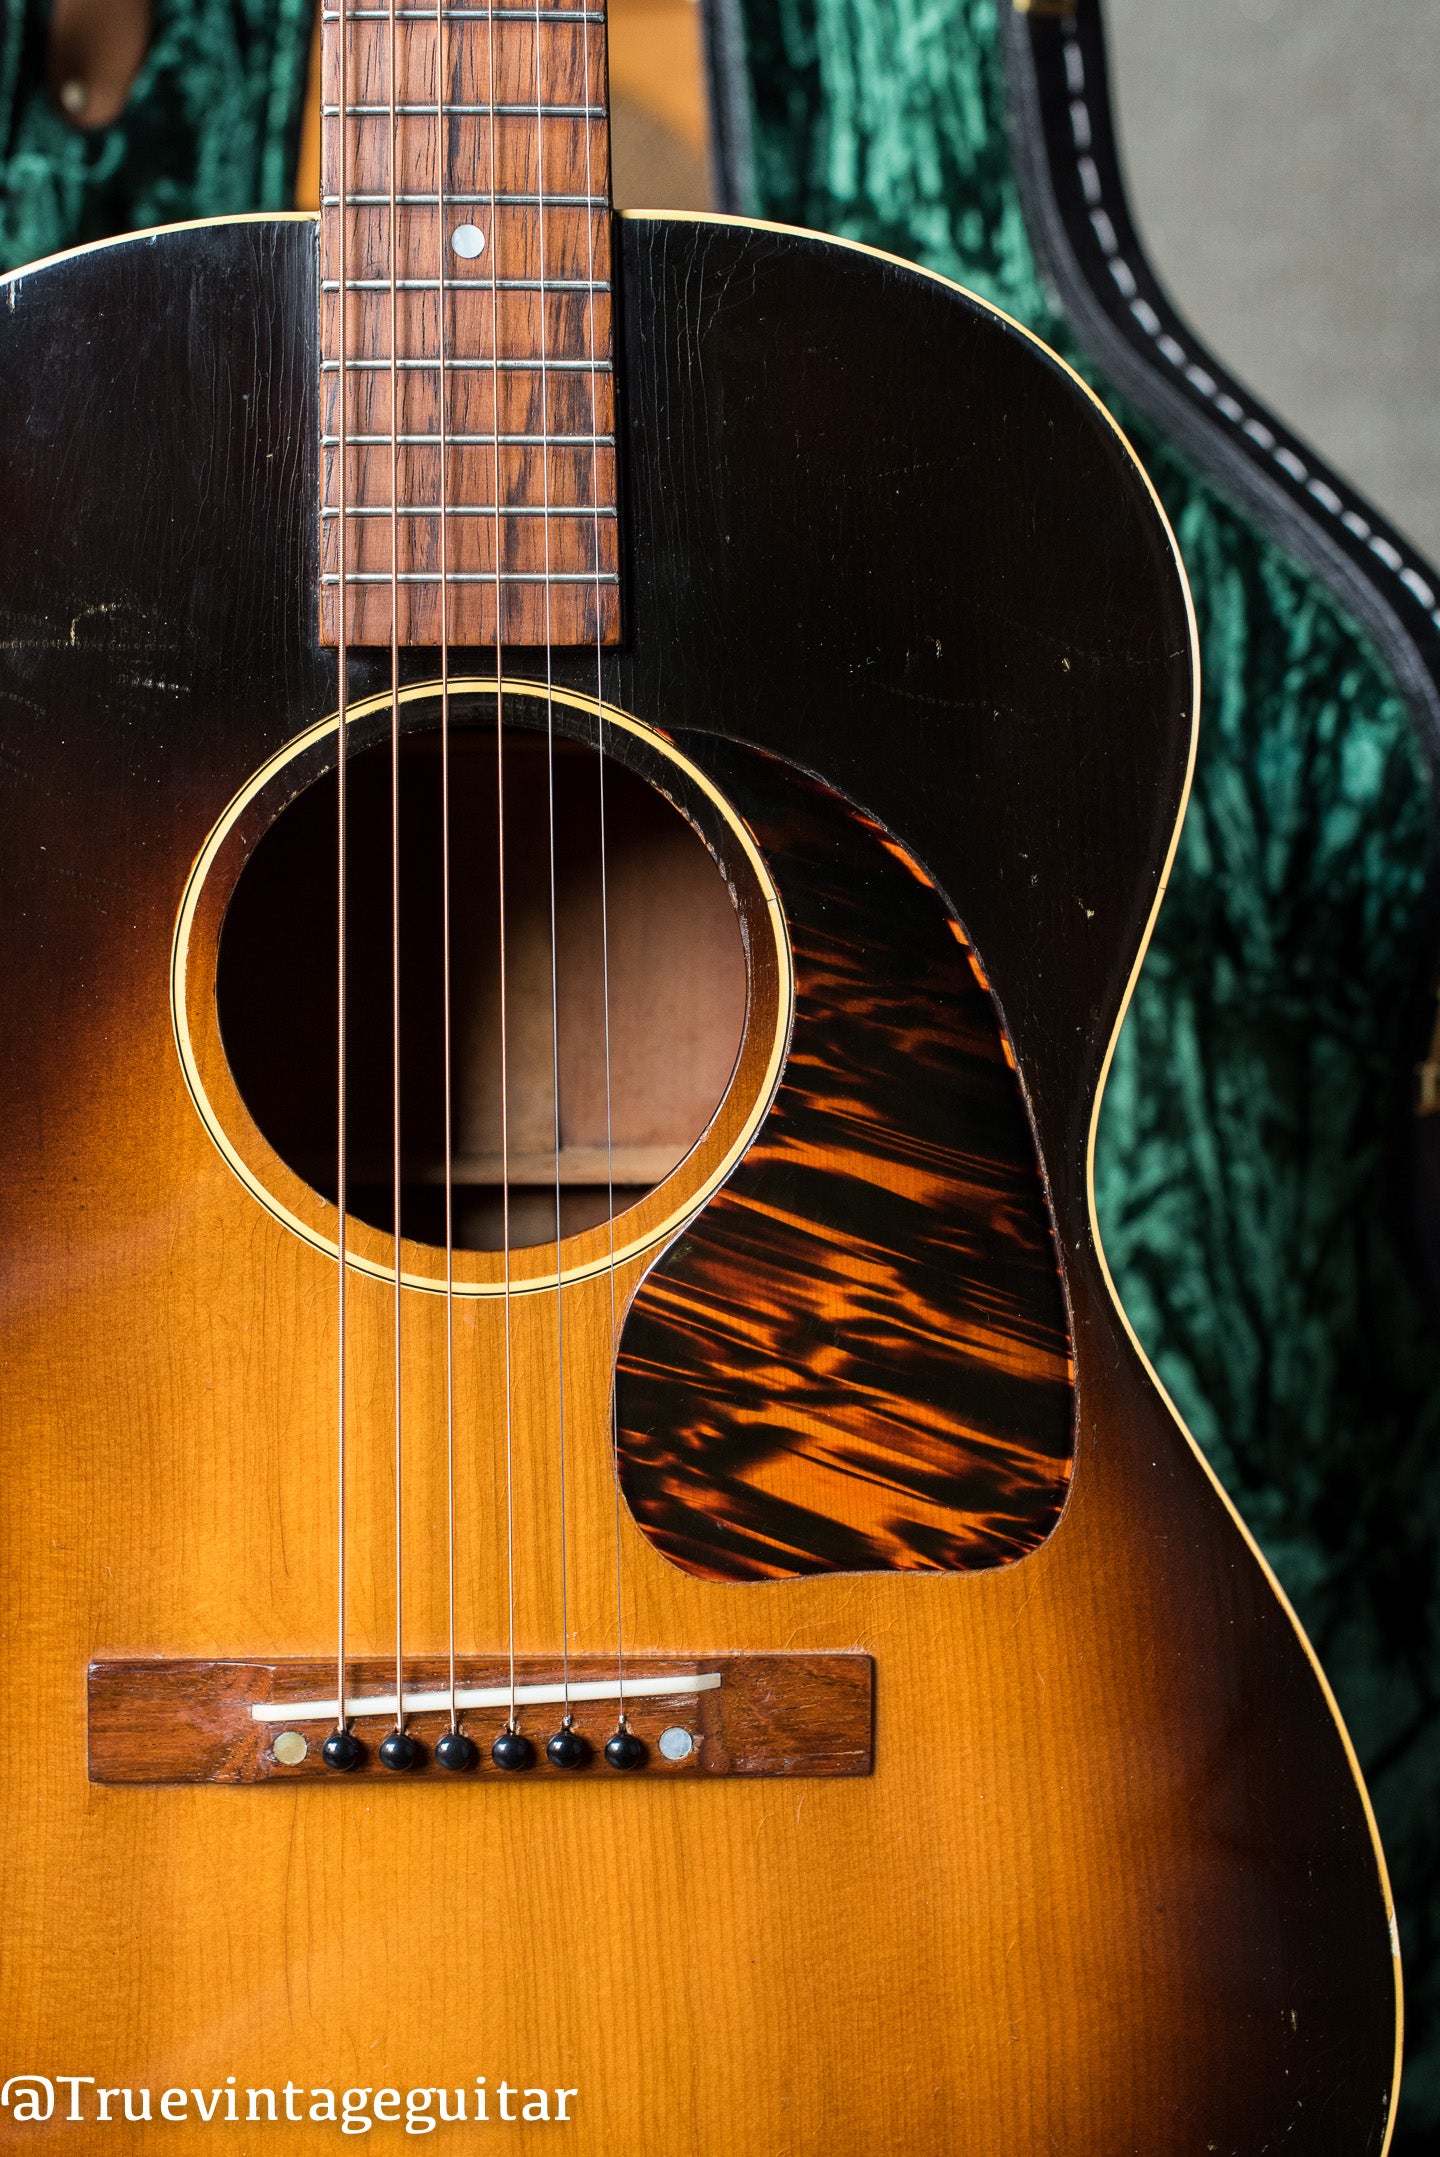 Firestripe pickguard Gibson LG-2 guitar